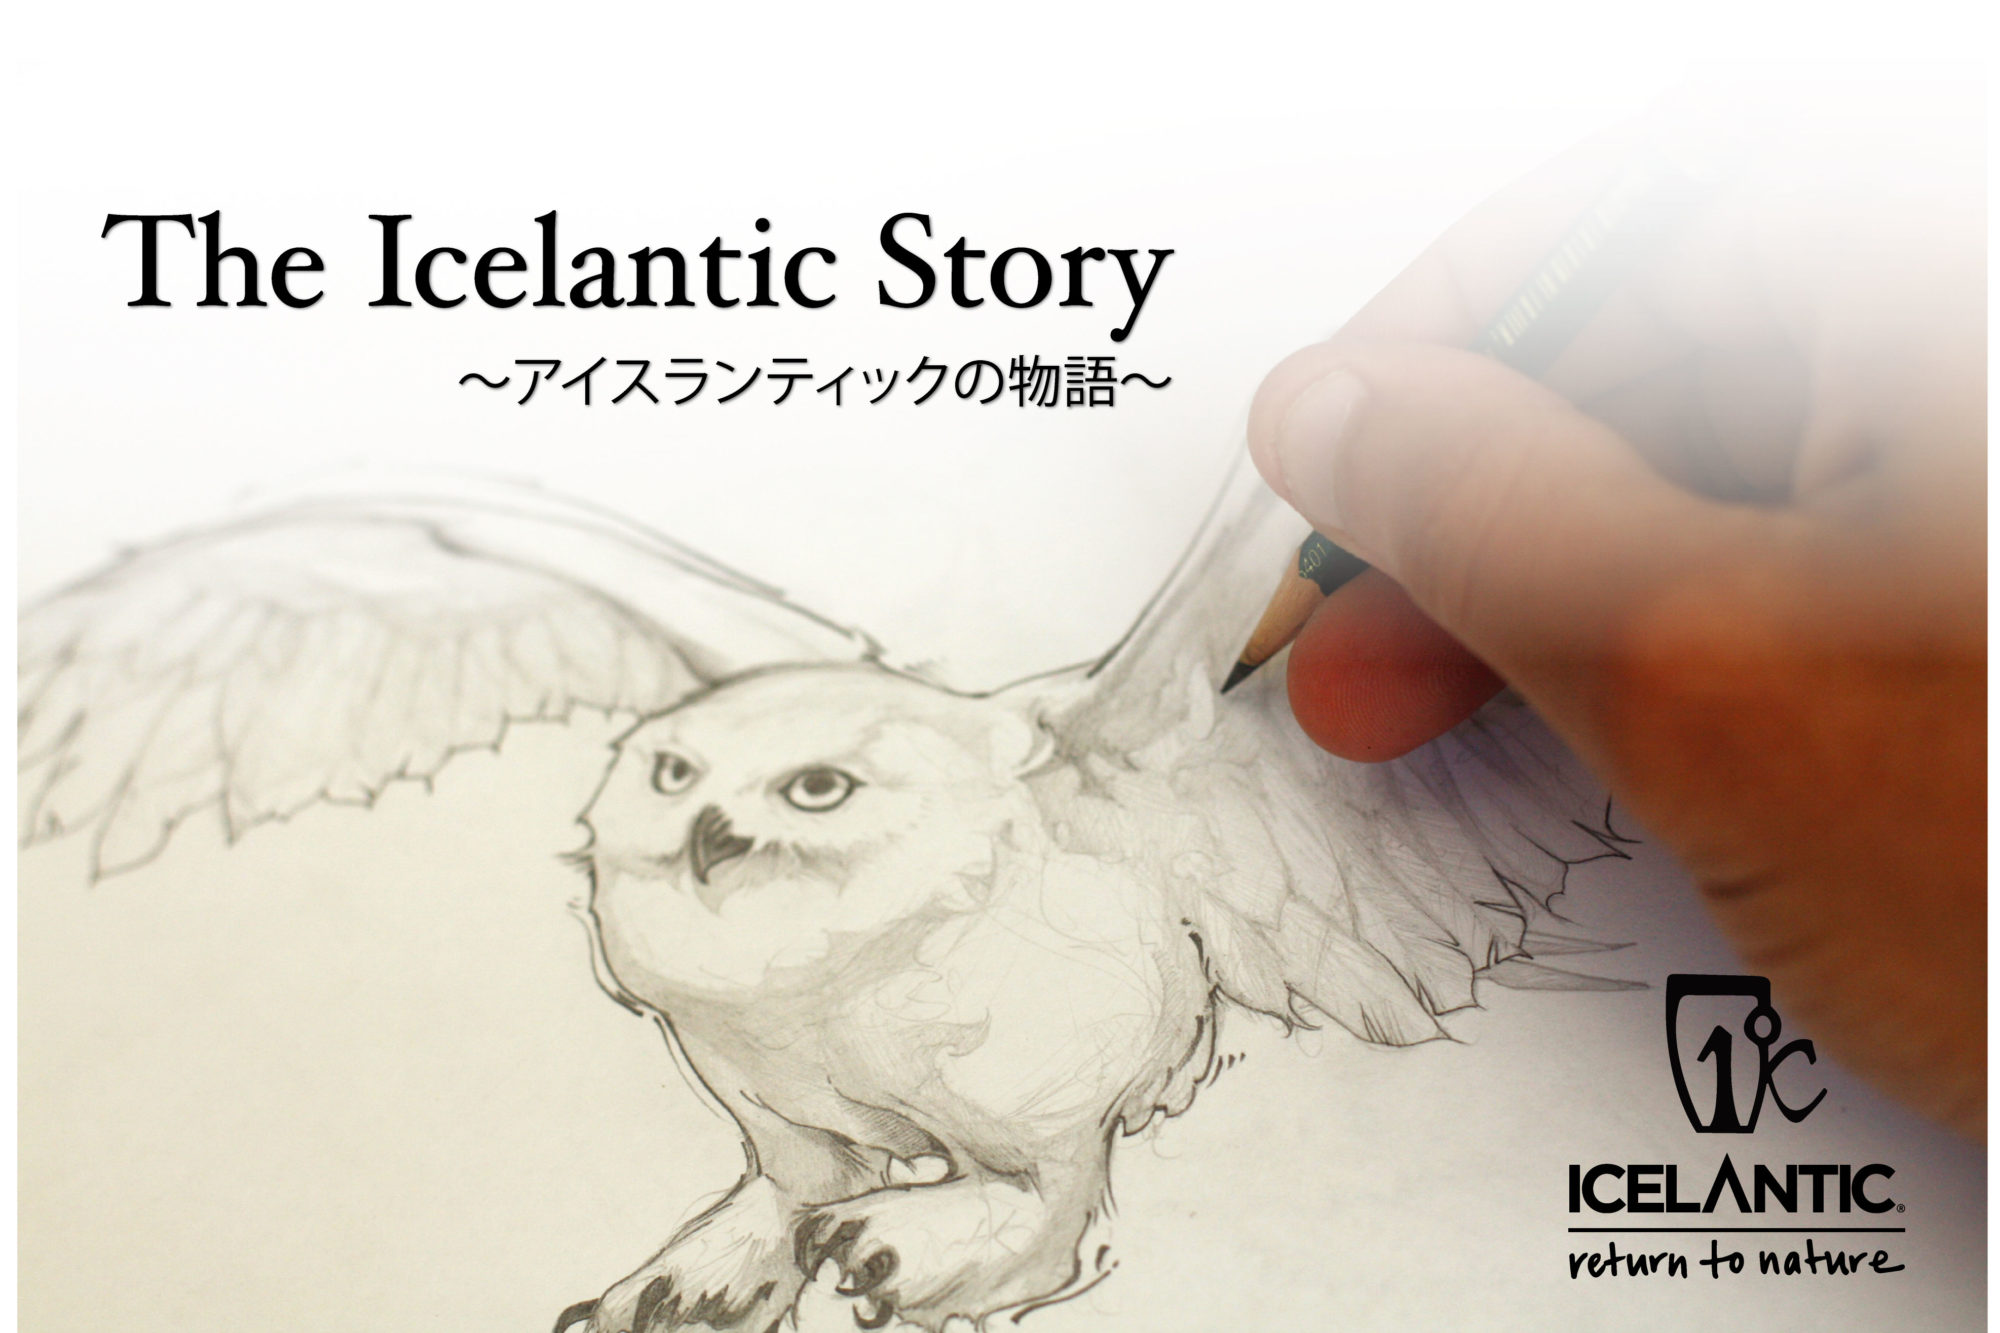 The Icelantic Story Return To Natureに込められた本当の意味とは